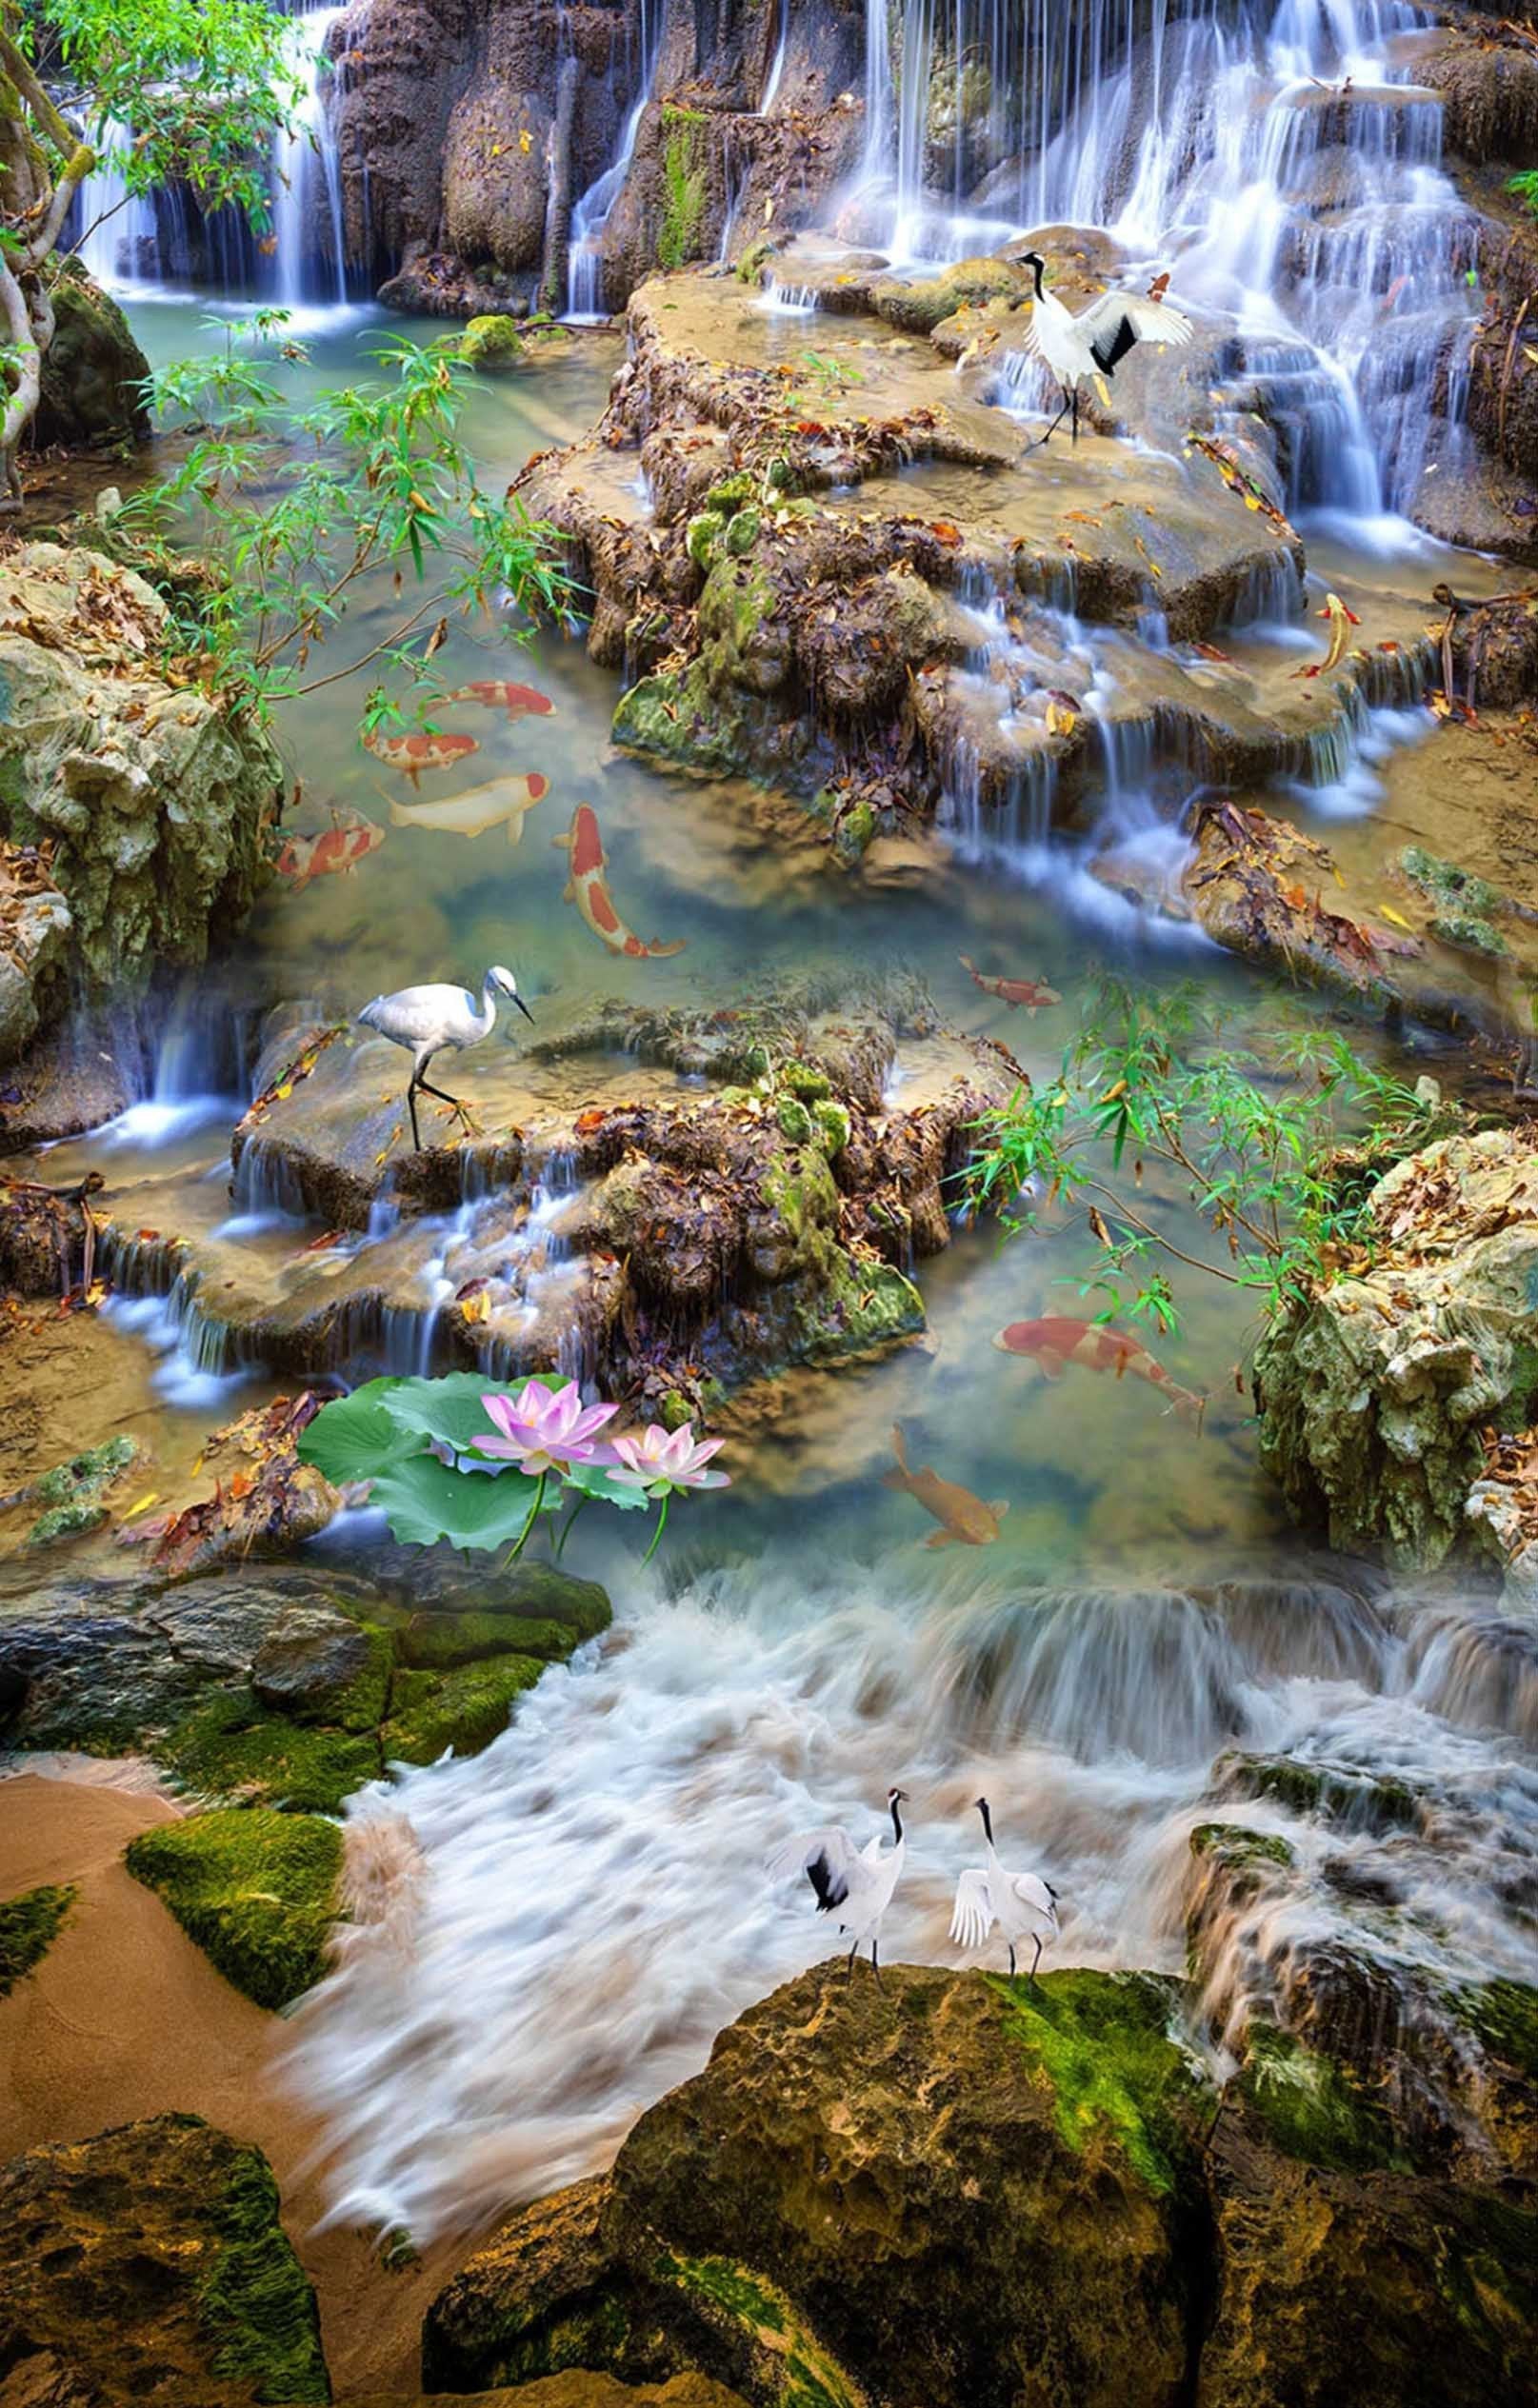 3D Waterfall Cranes Fishes 1411 Stair Risers Wallpaper AJ Wallpaper 